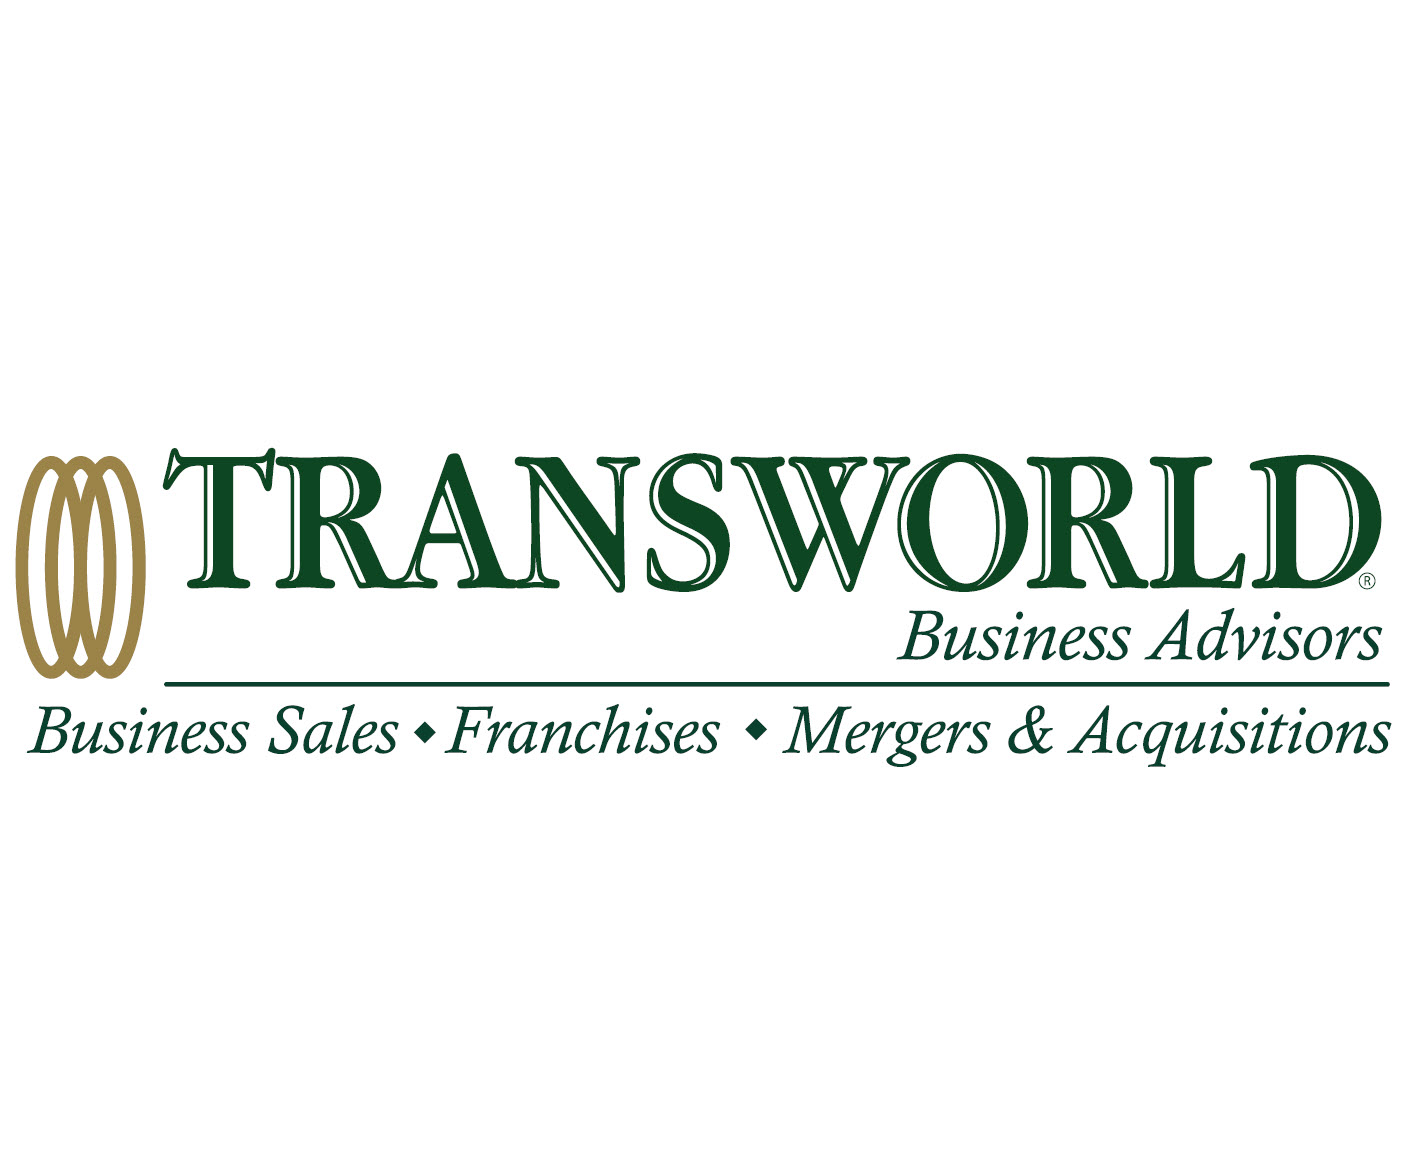 Transworld Business Advisors North Sydney Logo